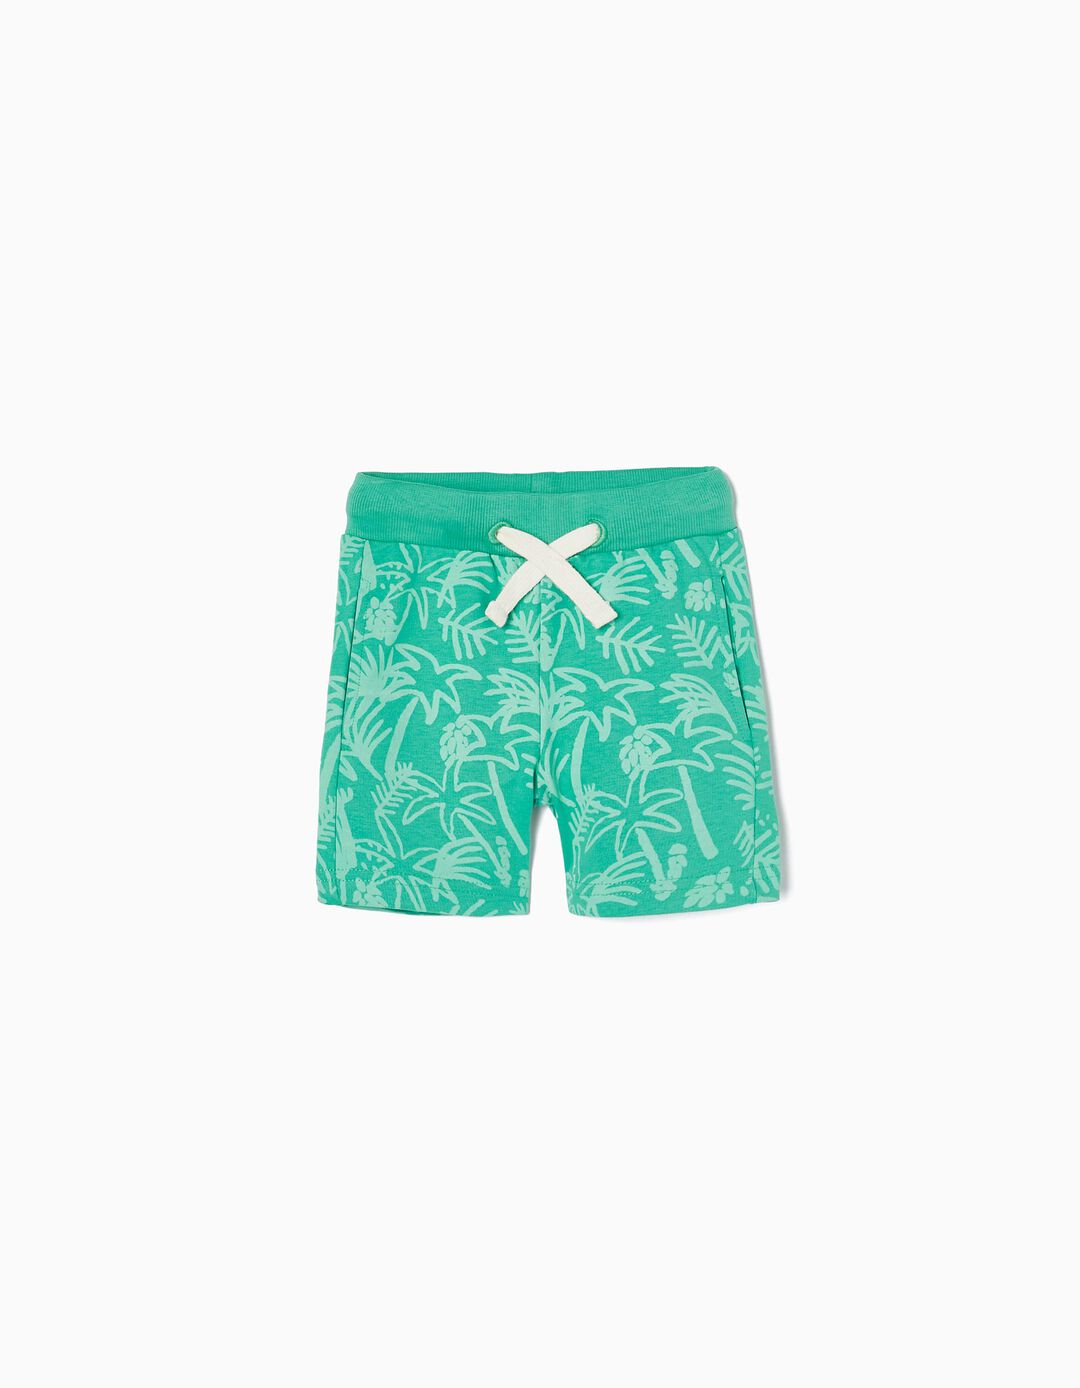 Cotton Shorts for Baby Boys 'Tropical', Green